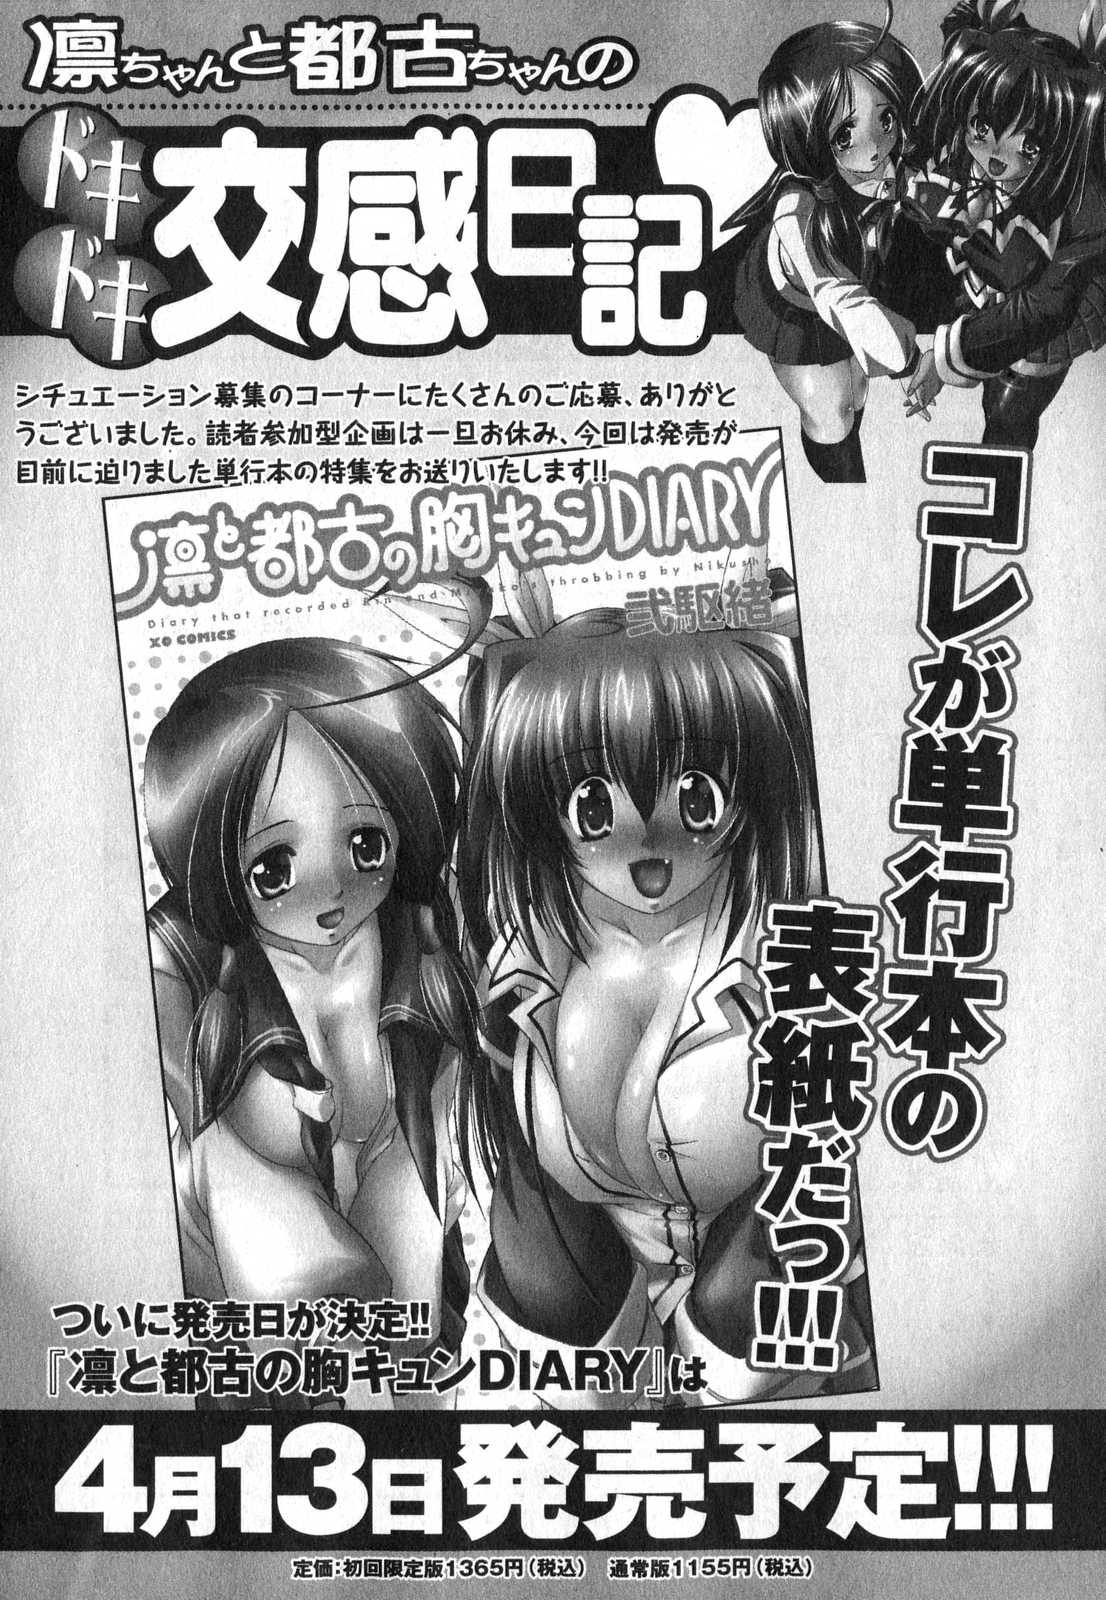 COMIC XO 2007年5月号 Vol.12